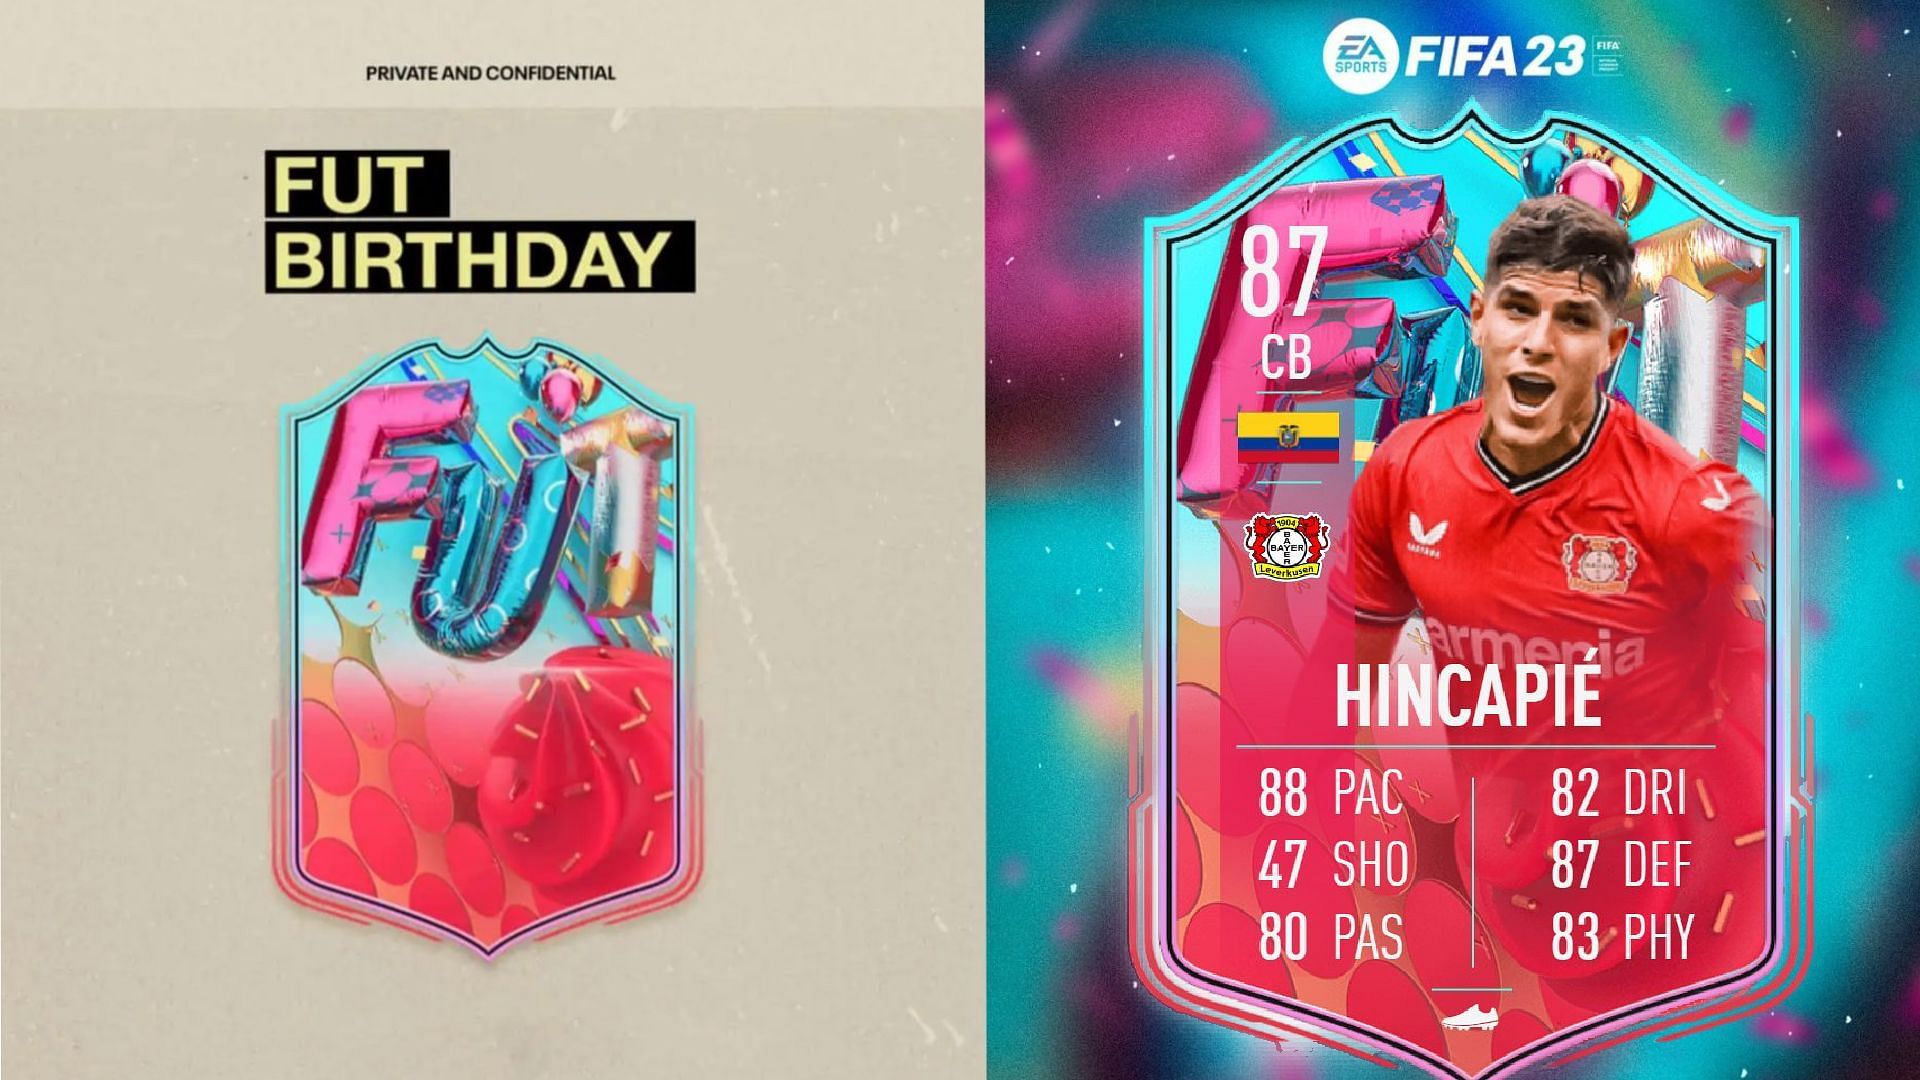 Piero Hincapie Objective is live in FIFA 23 (Image via EA Sports)